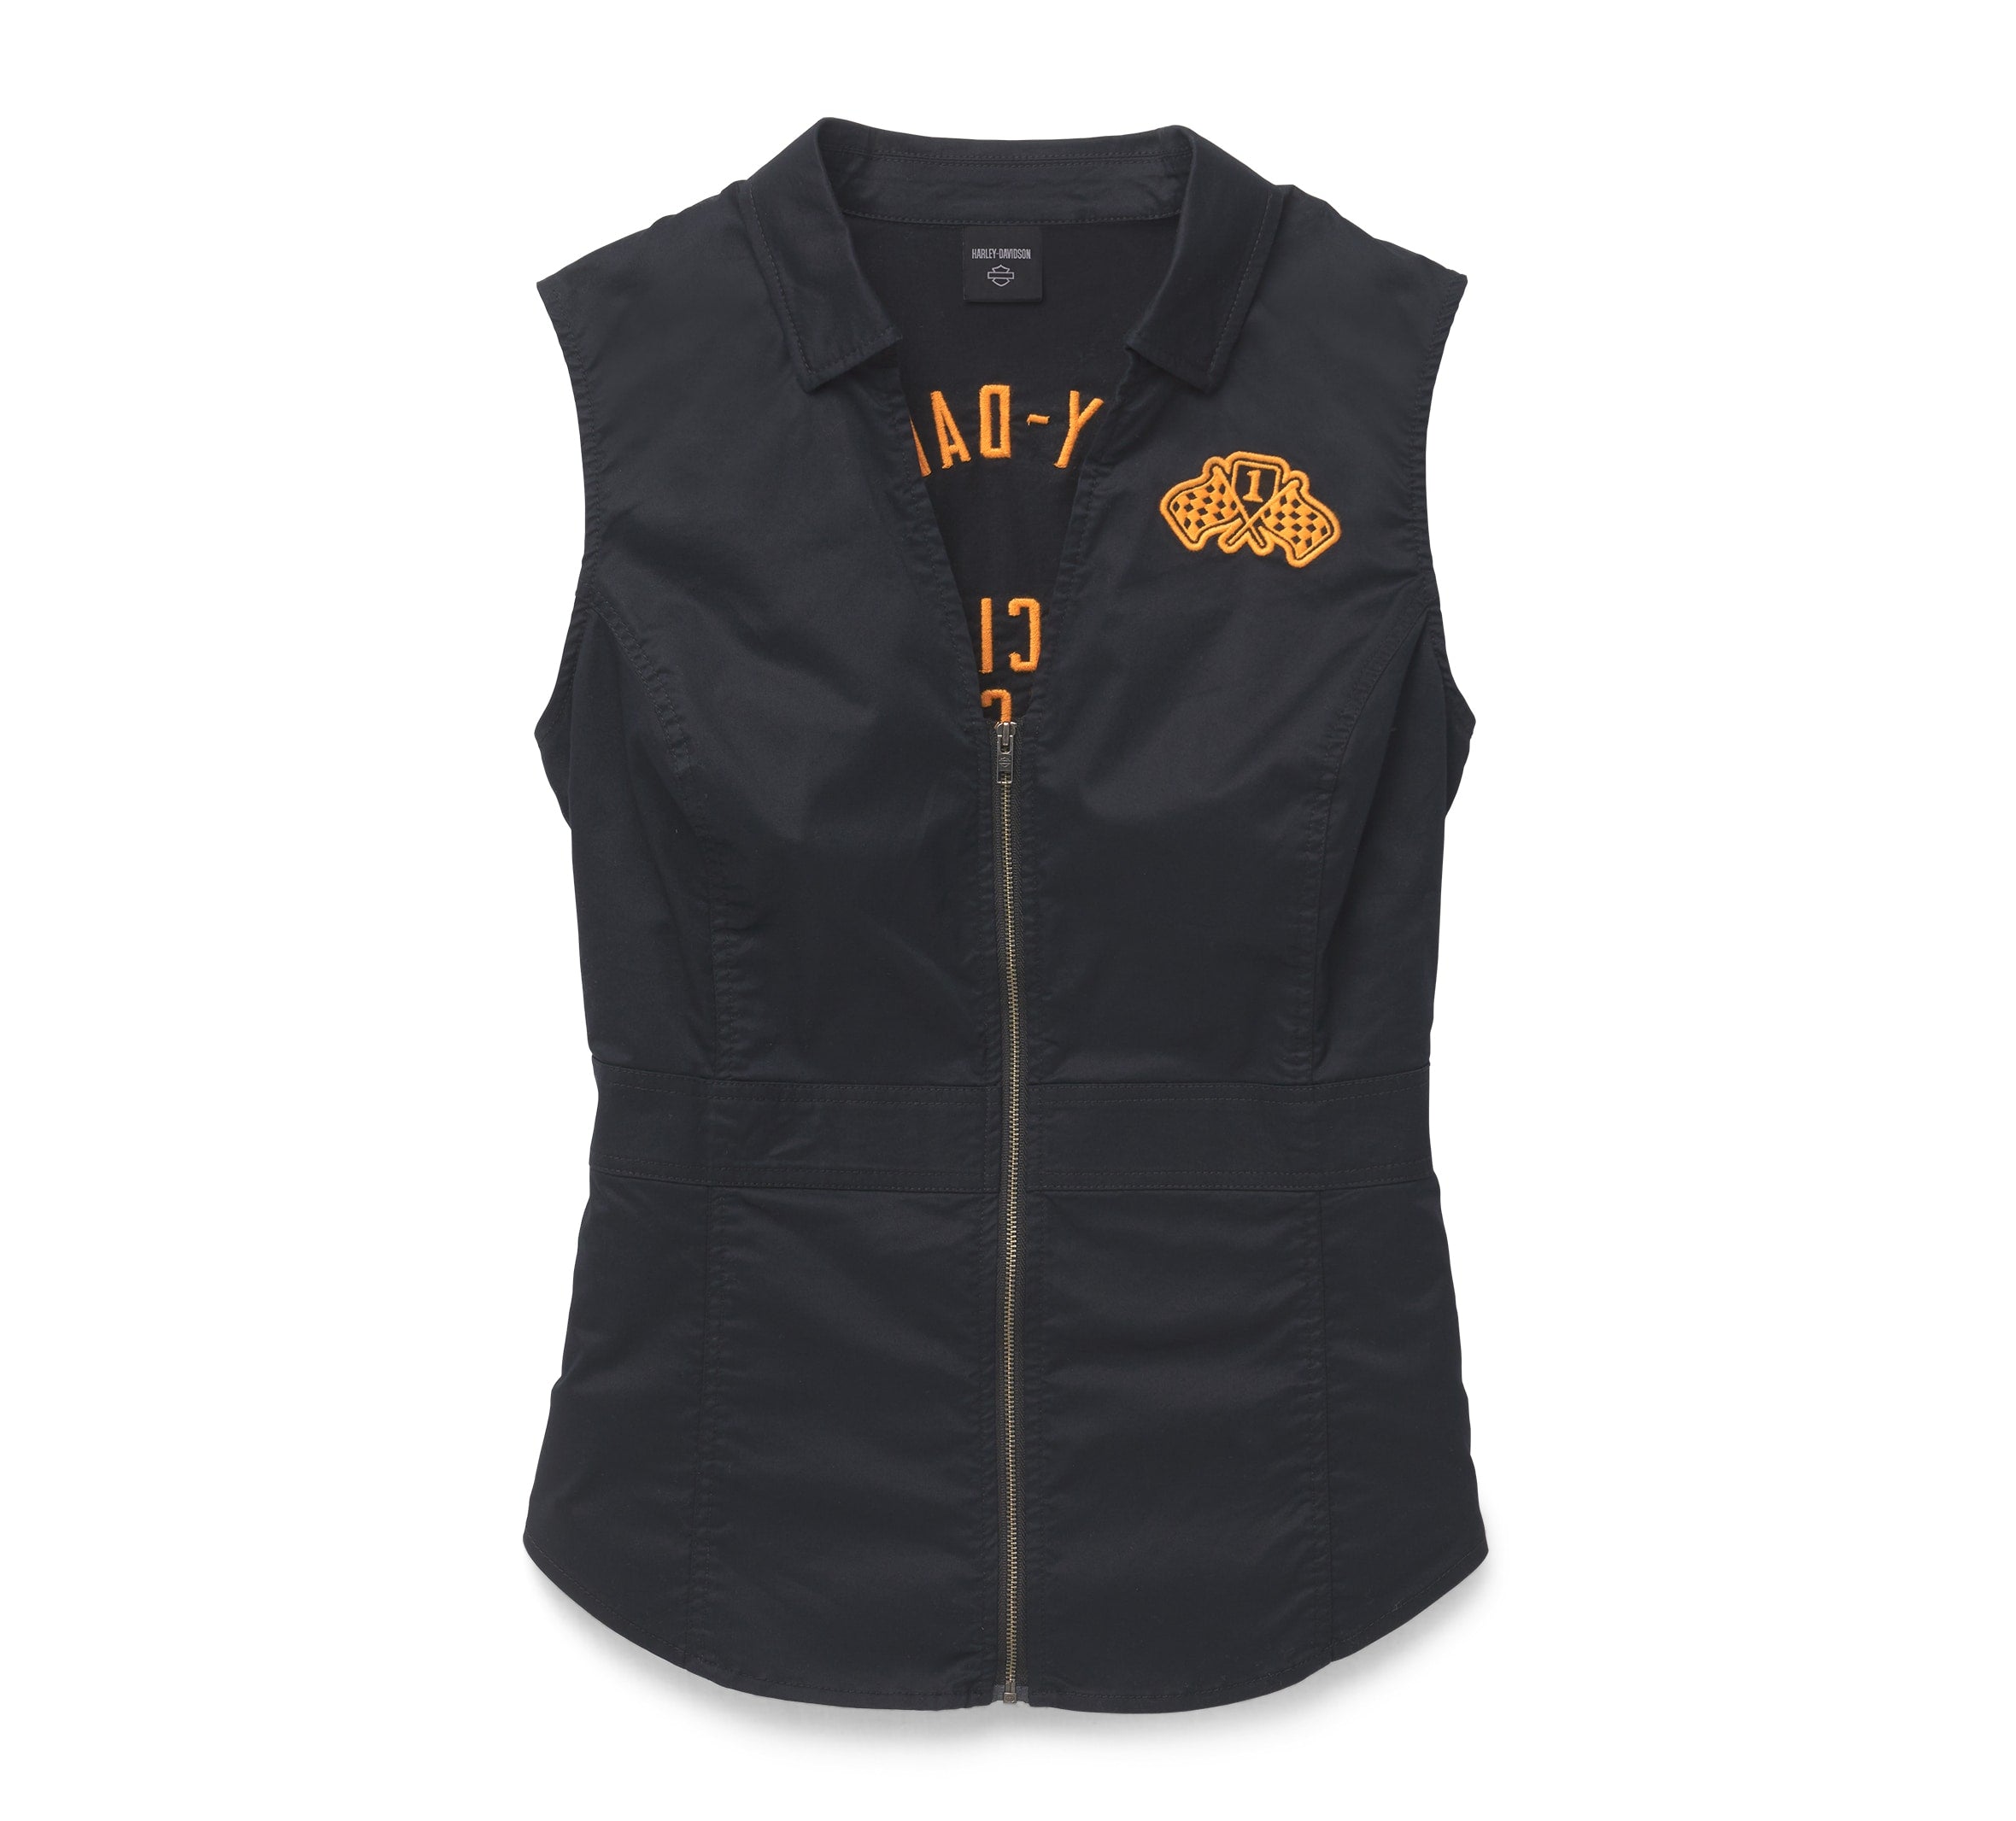 Harley-Davidson Women's Ritual Racing Sleeveless Shirt, Black - 96664-22VW